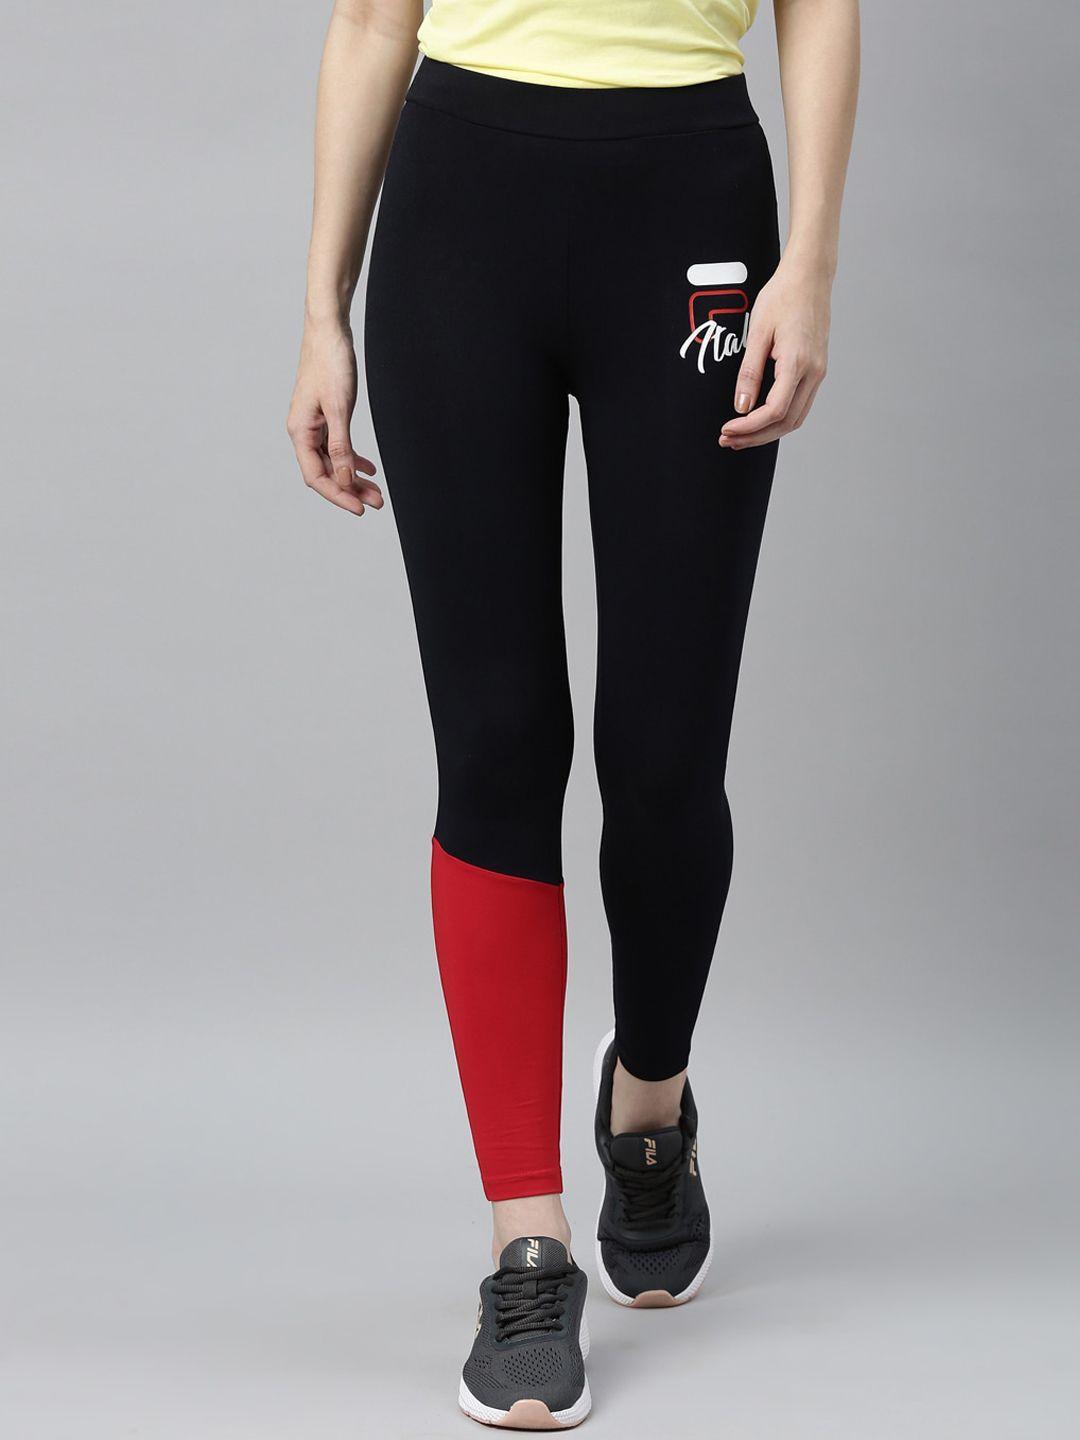 fila women black & red colourblocked tights